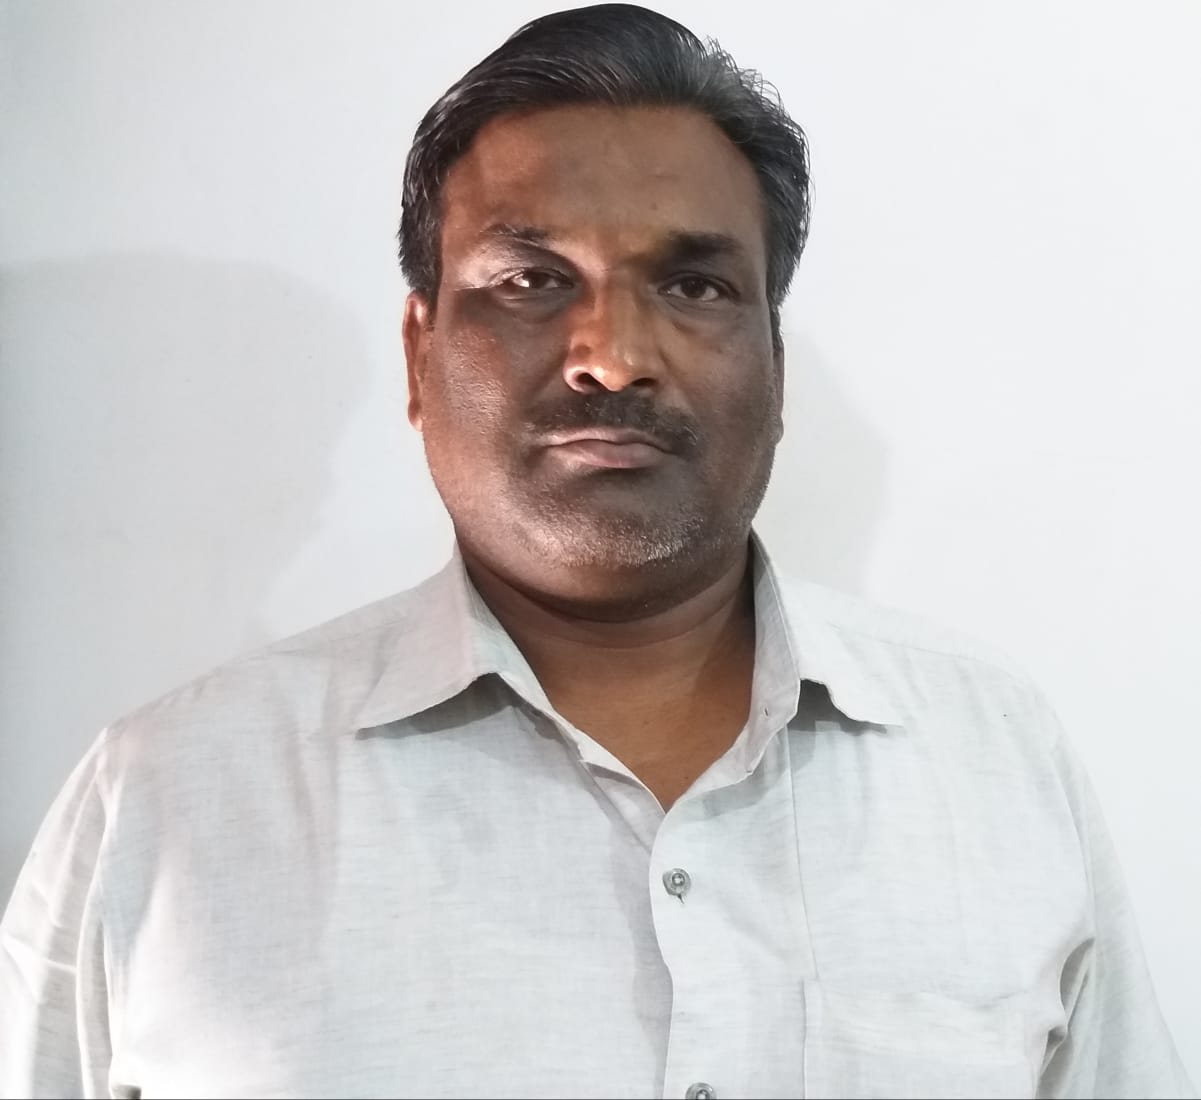 वरिष्ठ शिक्षक व पत्रकार अरुण सिंह आचार्य "पत्रकार समाज कल्याण समिति" के जिला प्रभारी मनोनीत | New India Times